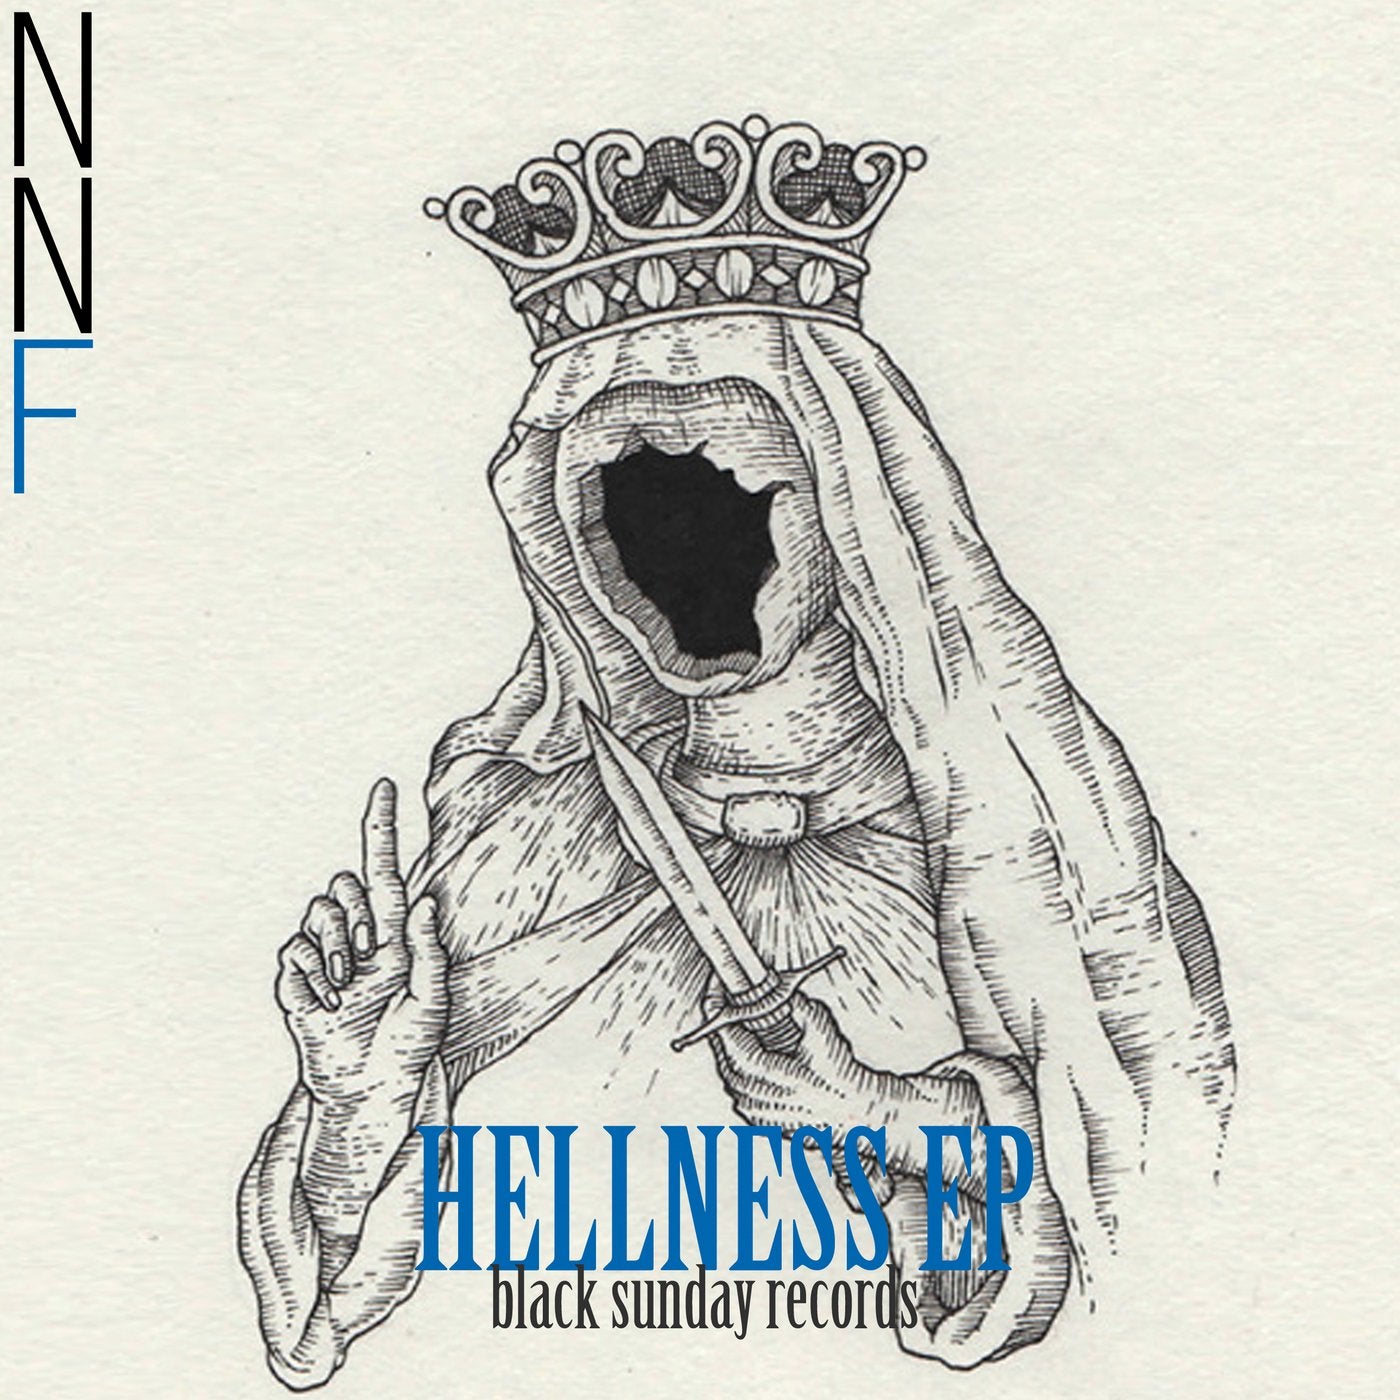 Nnf - Hellness